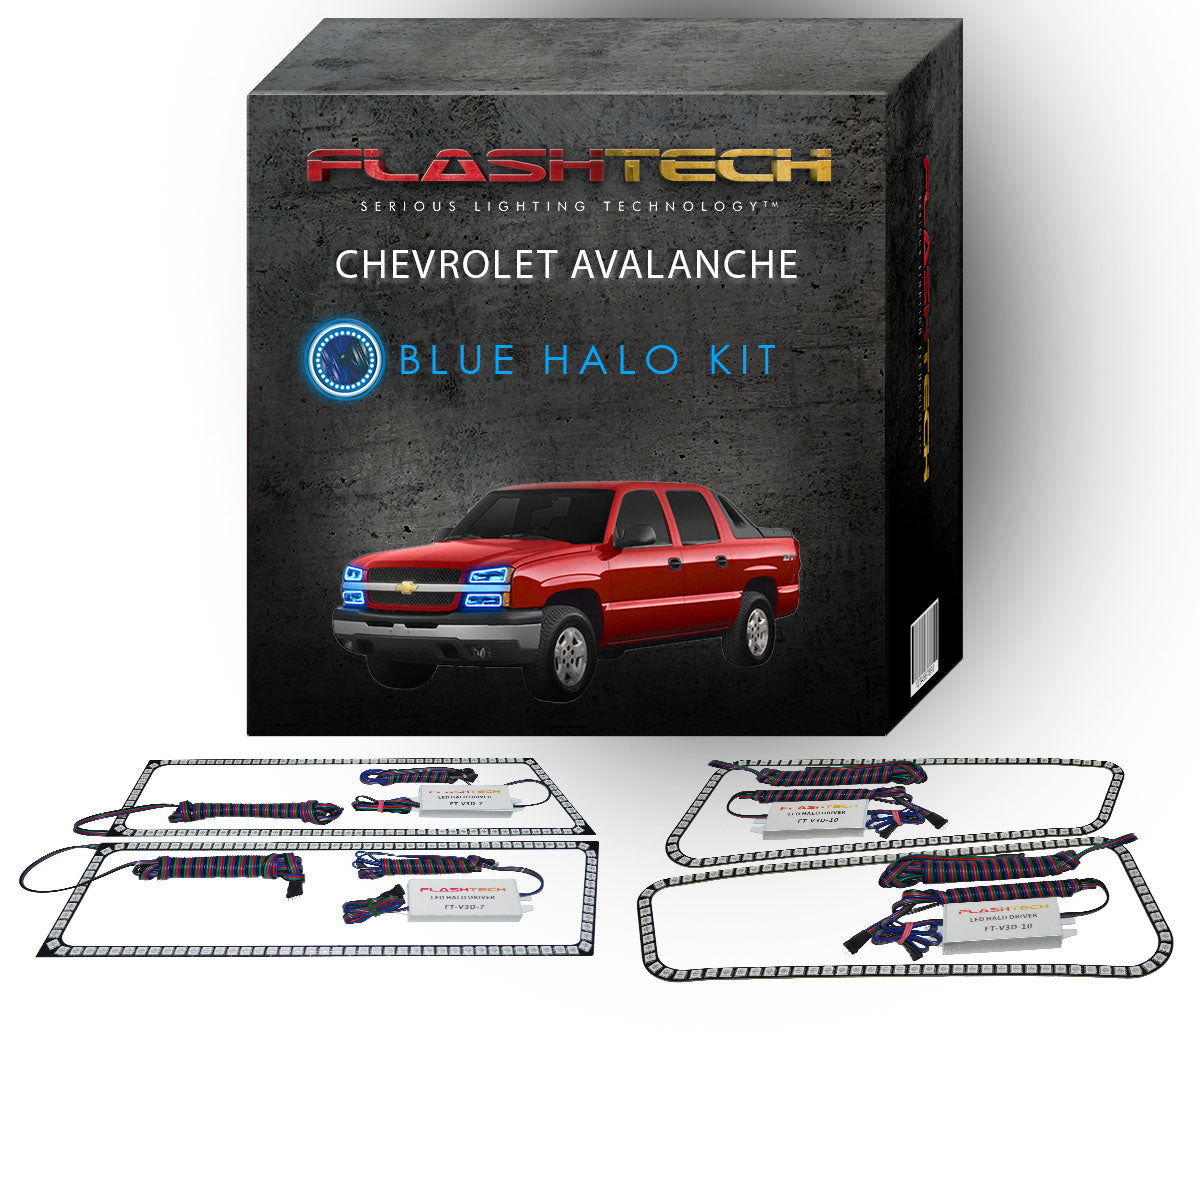 Chevrolet-Avalanche-2003, 2004, 2005, 2006-LED-Halo-Headlights-RGB-No Remote-CY-AVNC0306-V3H